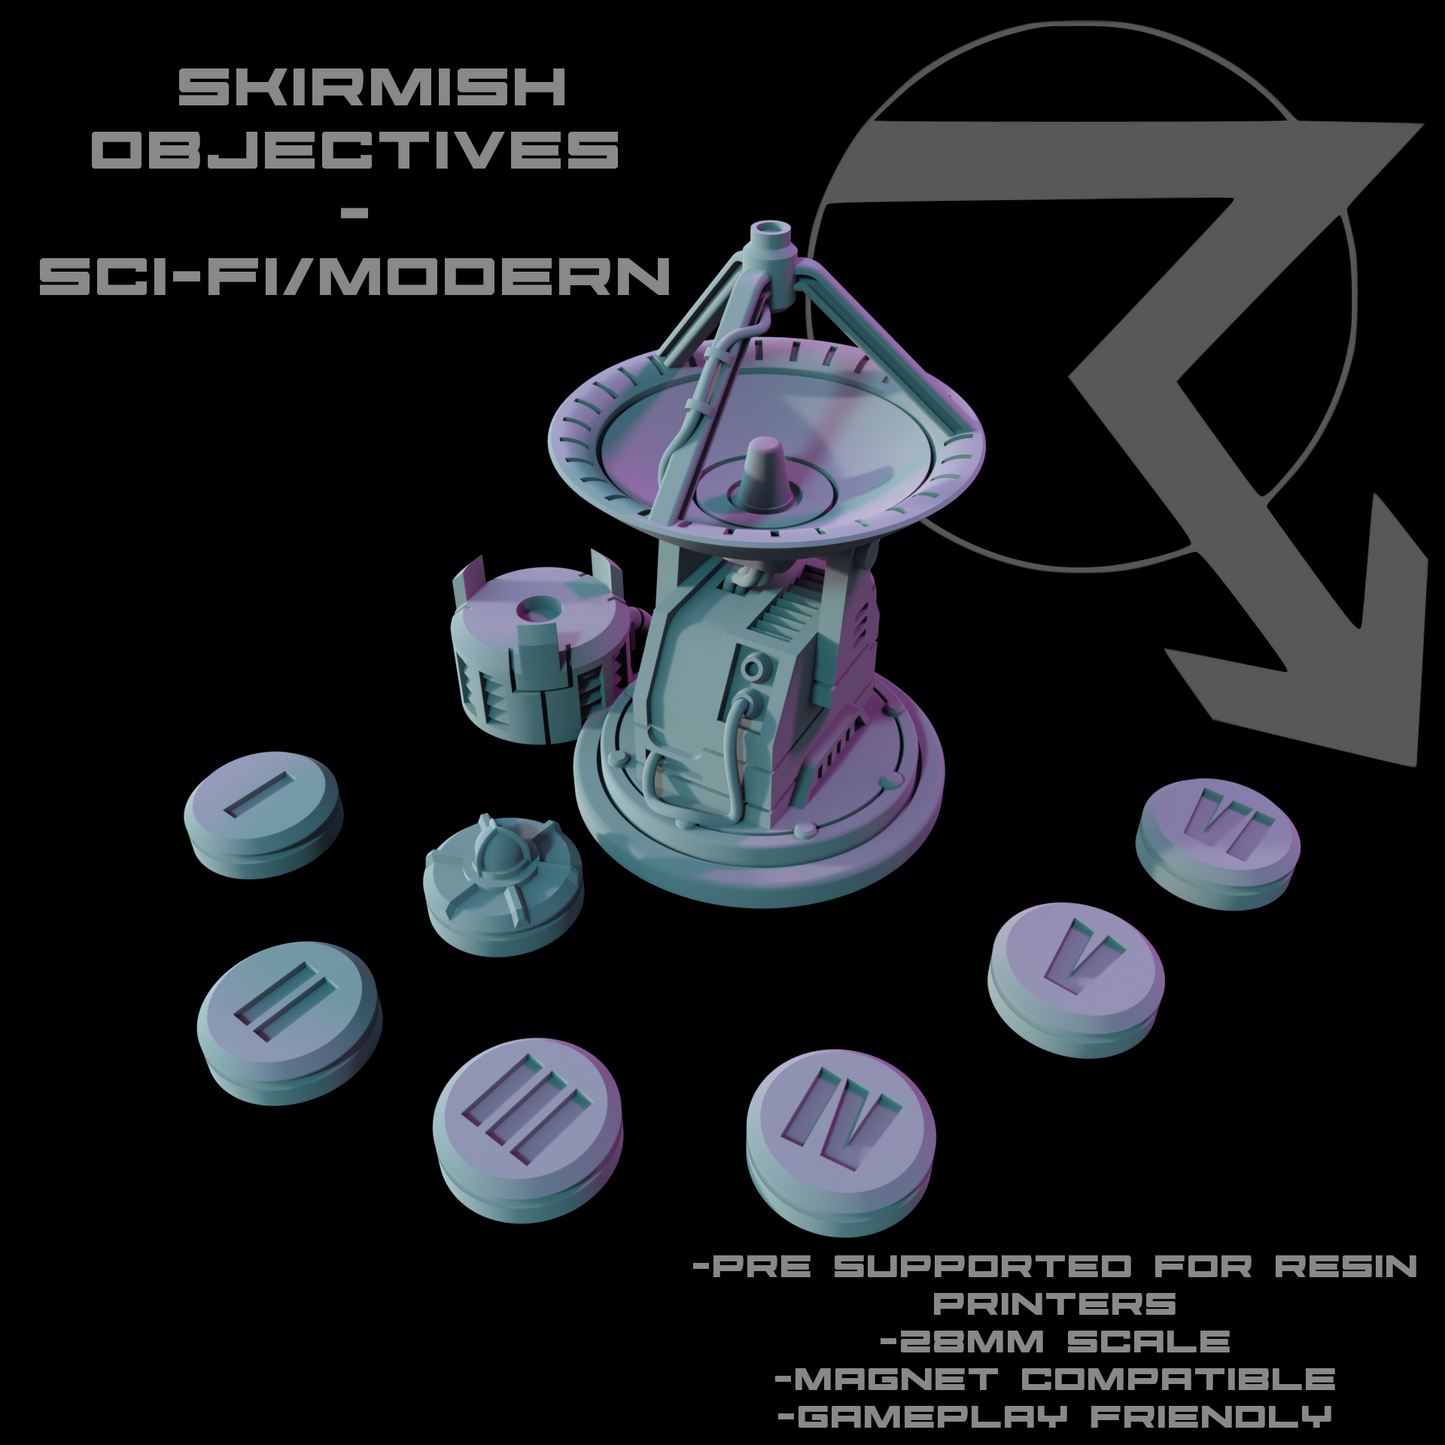 Skirmish Objectives - Sci-Fi/Modern